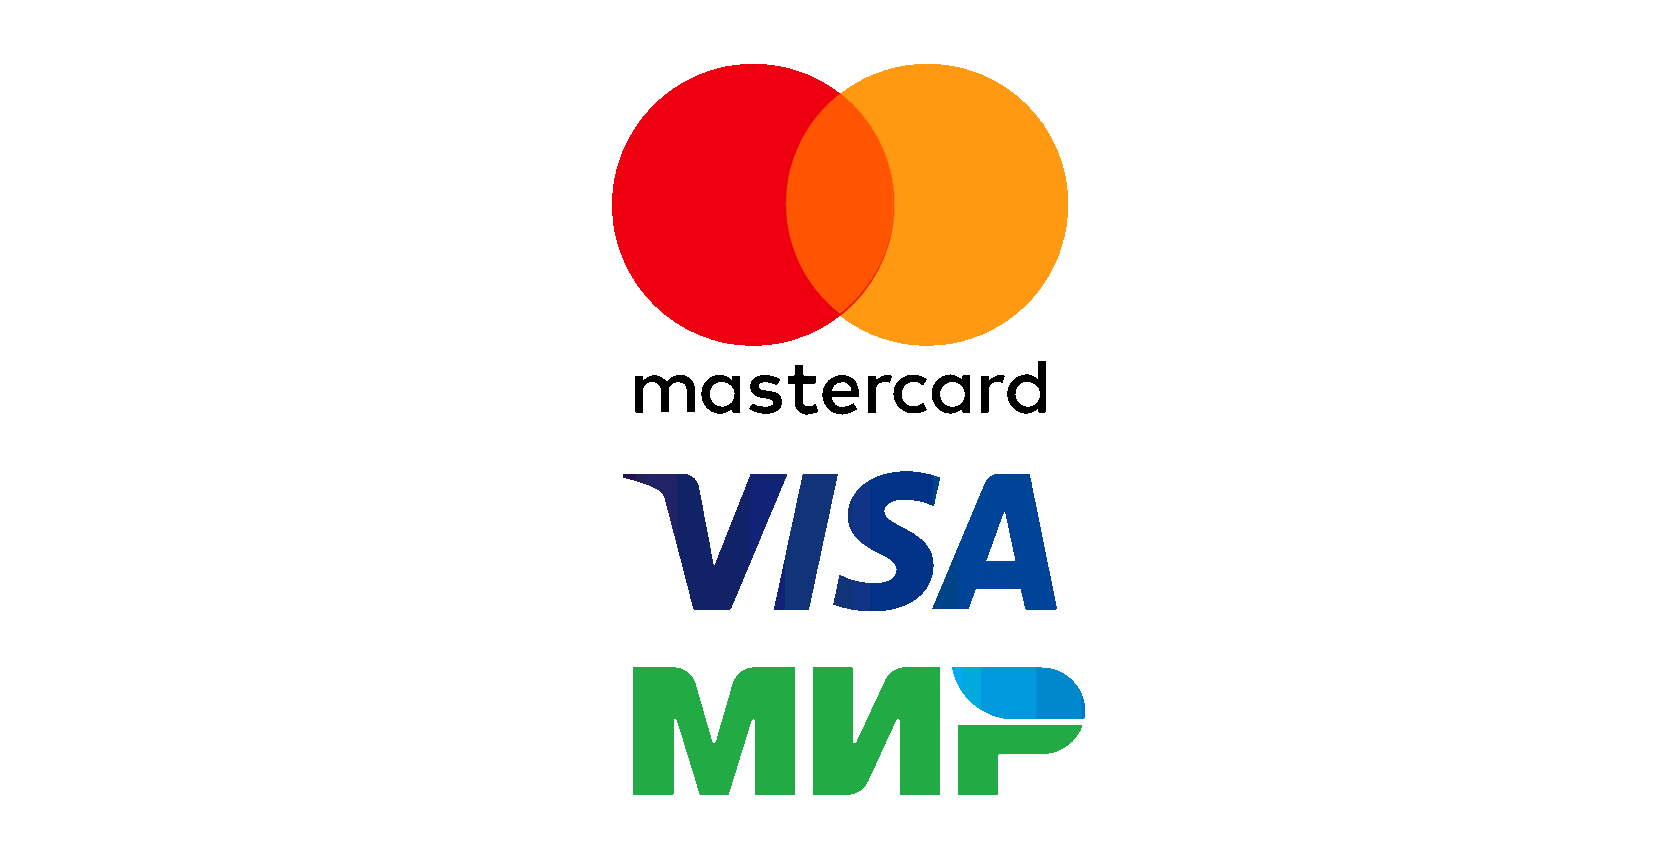 Оплатить картой виза. Visa MASTERCARD мир. Логотип visa MASTERCARD. Значки visa MASTERCARD мир. Лого виза Мастеркард мир.